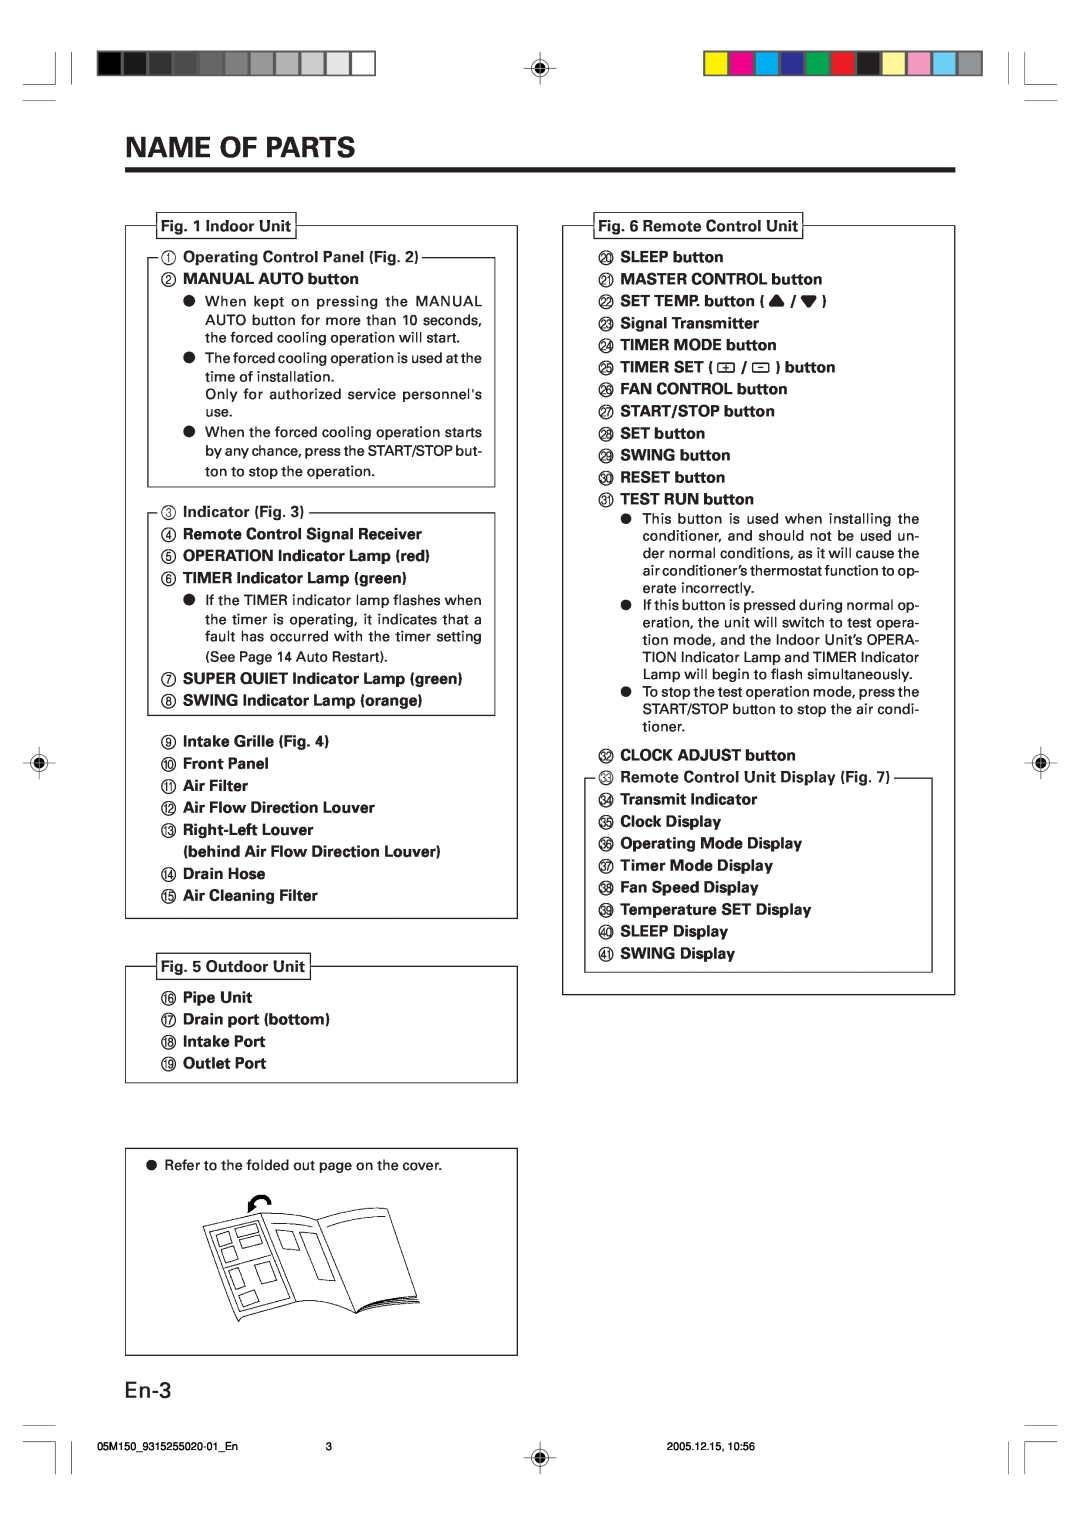 Fujitsu ASU18CL, AOU18CL operation manual Name Of Parts, En-3 